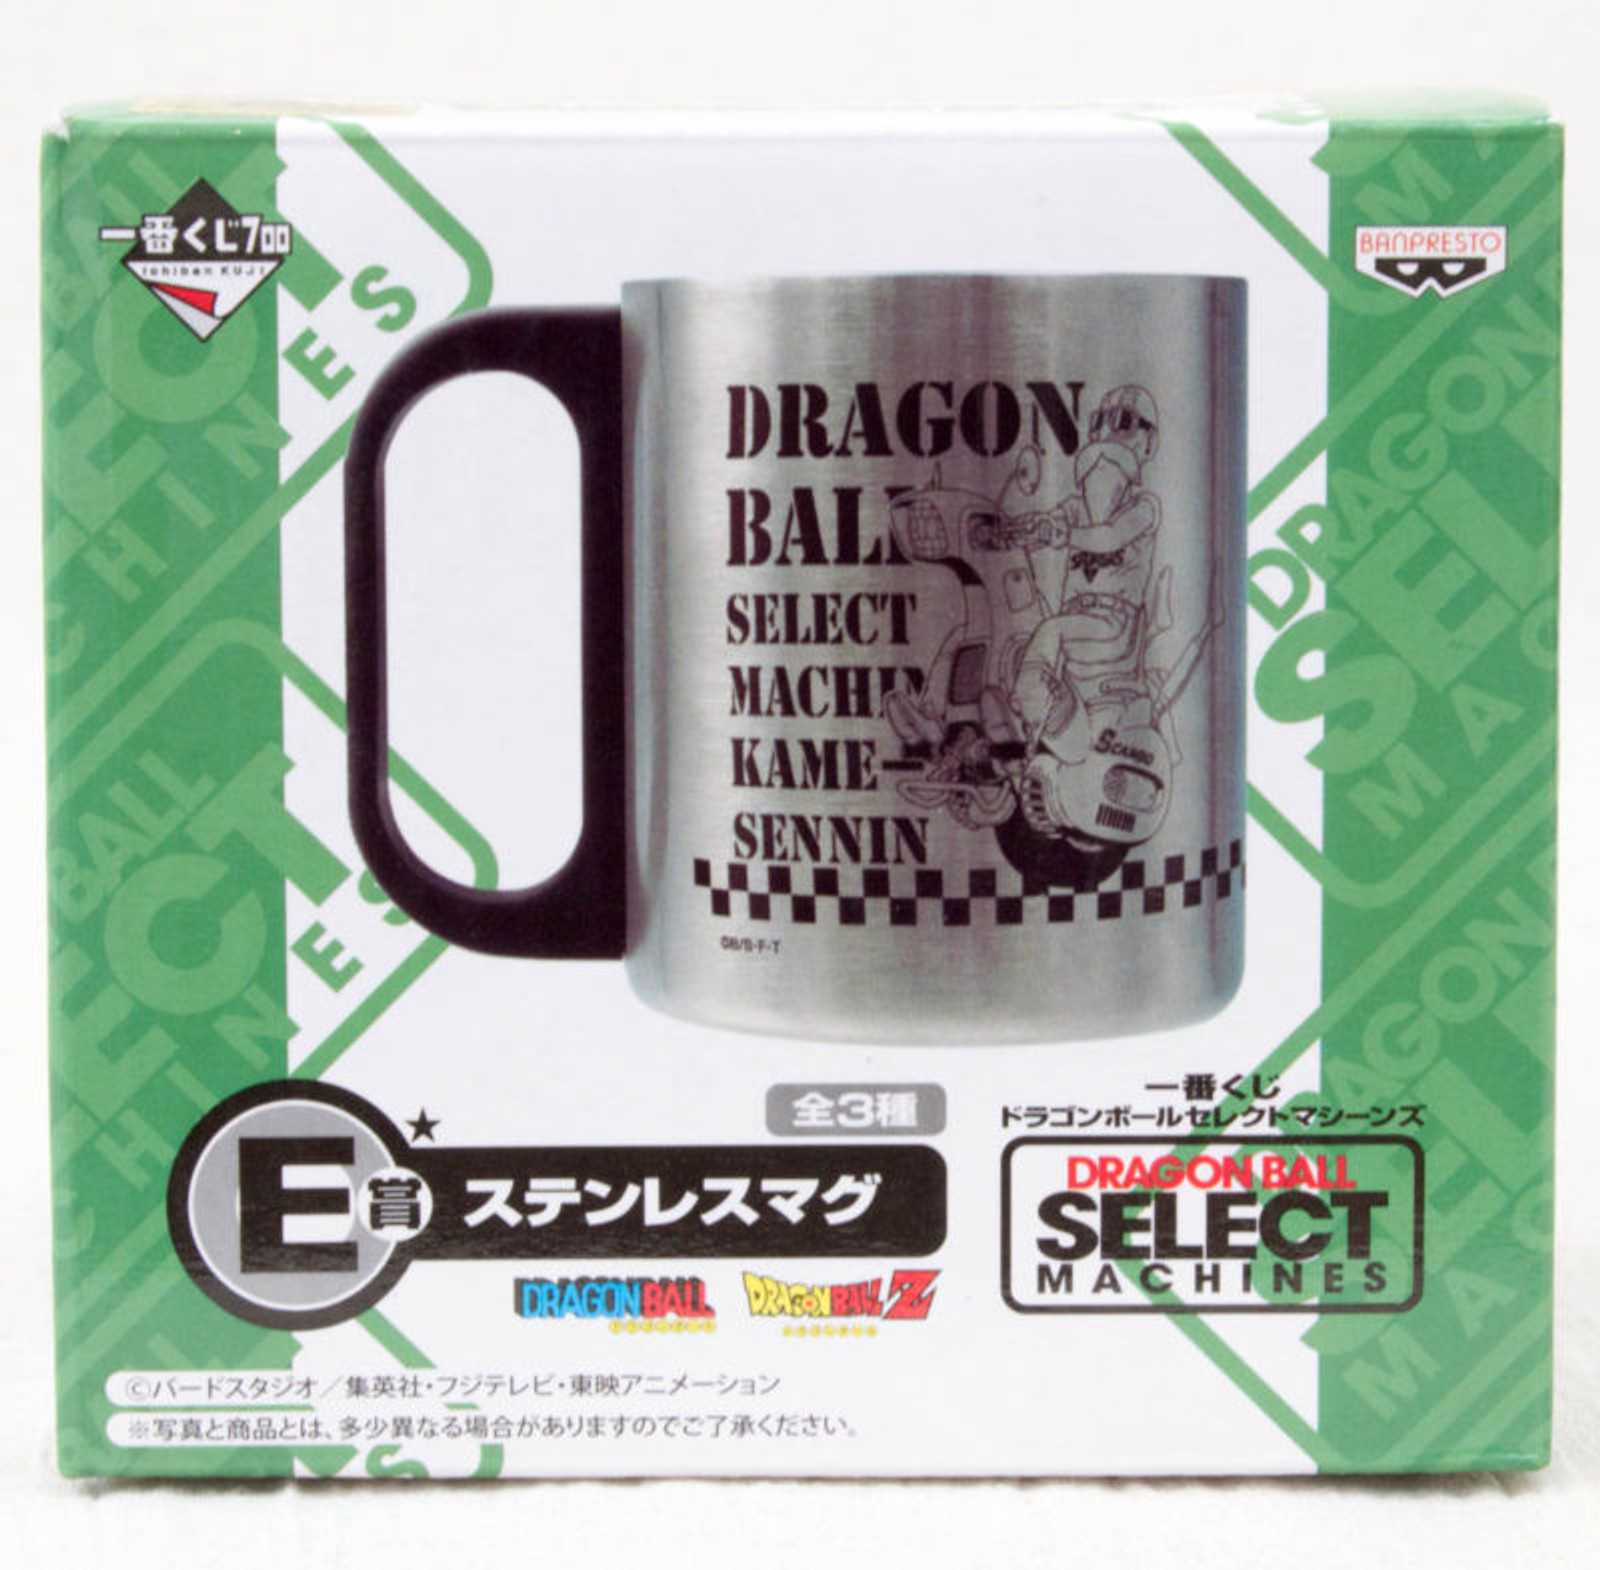 Dragon Ball Z Stainless Mug Kame-sennin on Machine Banpresto JAPAN ANIME MANGA